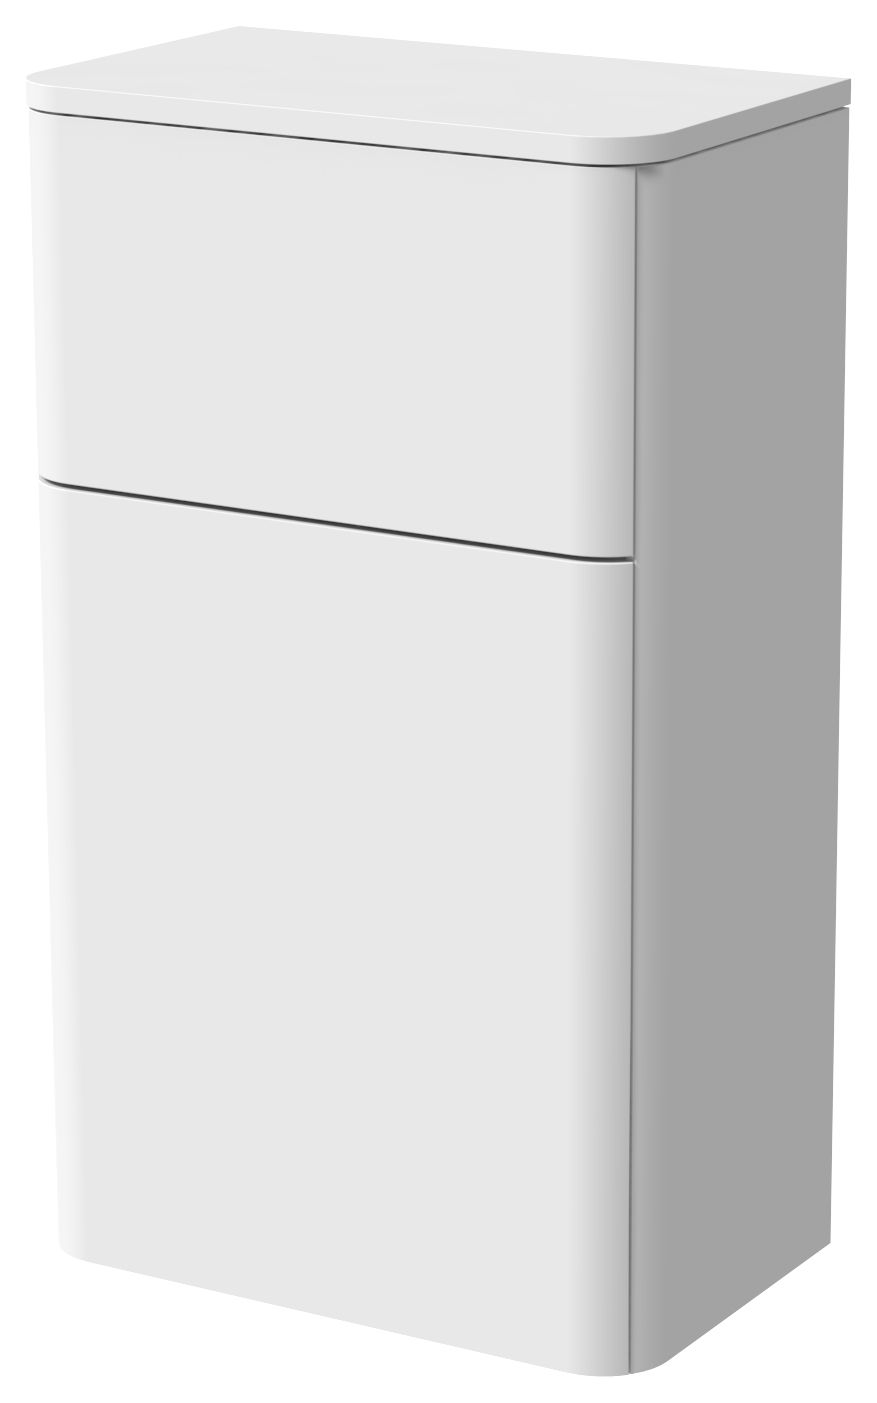 Wickes Malmo Gloss White Freestanding Toilet Unit - 832 x 500mm